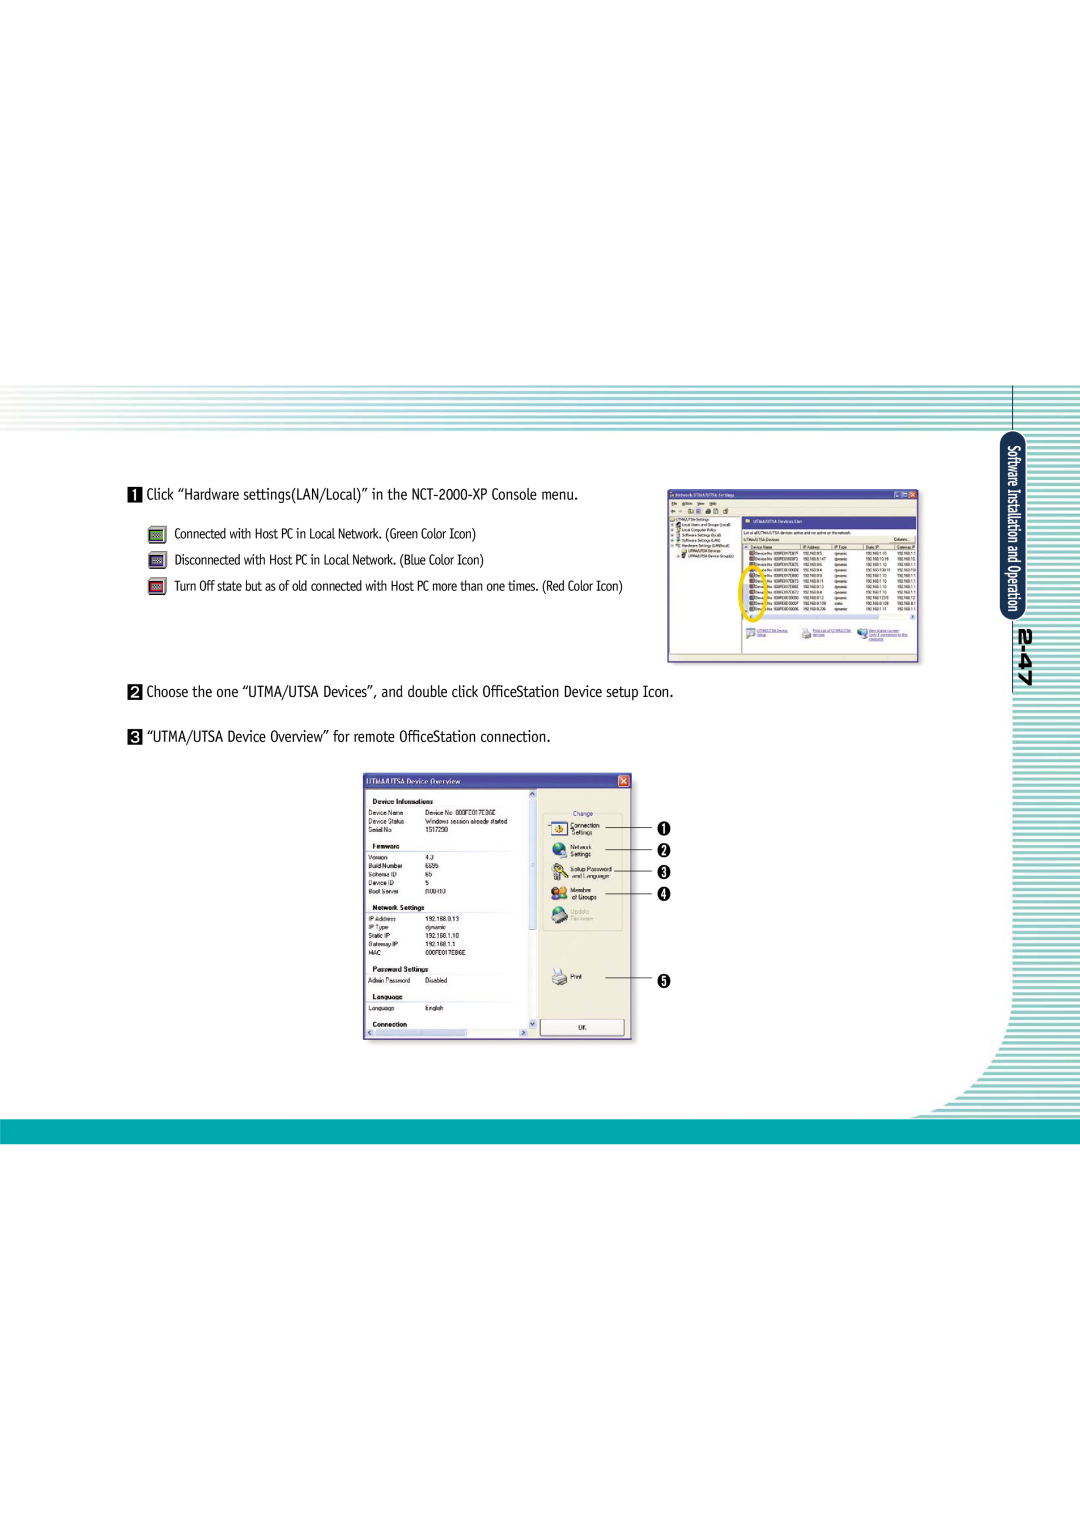 Gateway L110 manual 2-47, Click “Hardware settingsLAN/Local” in the NCT-2000-XP Console menu 